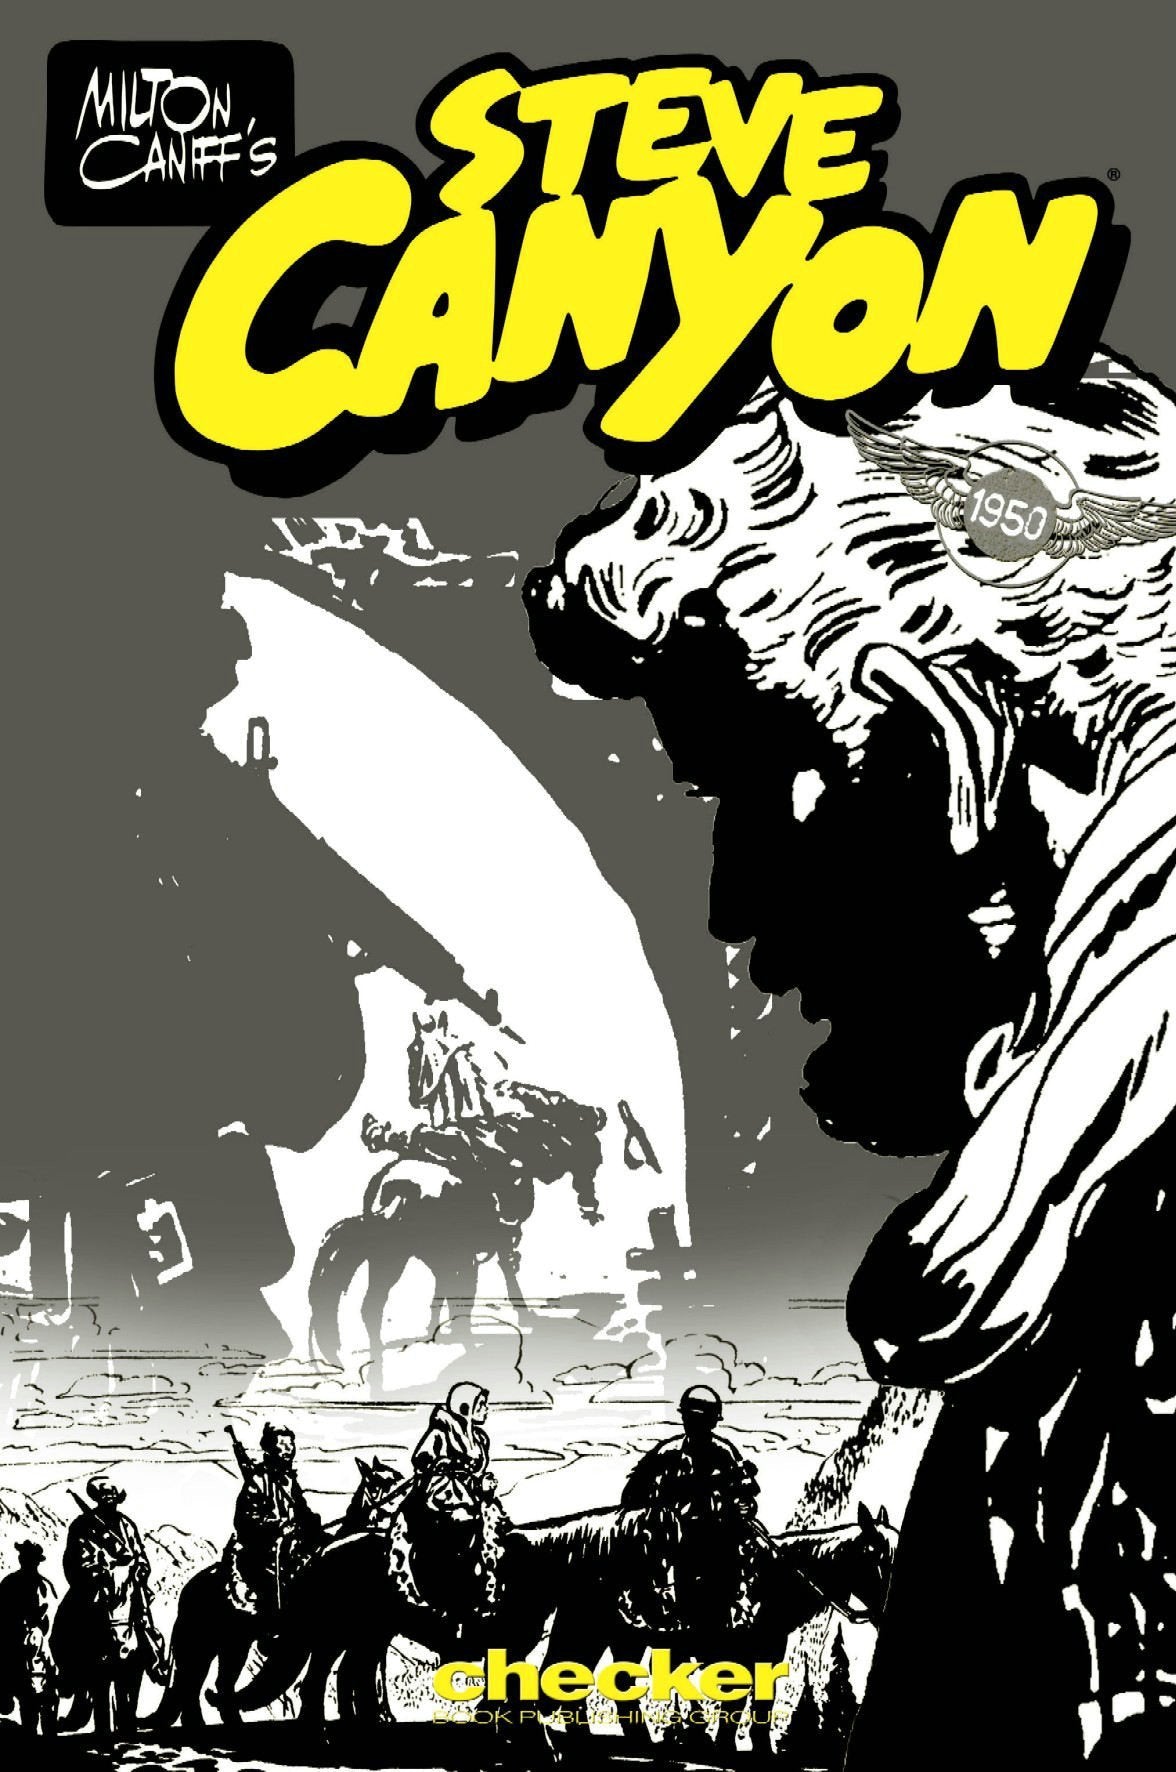 Milton Caniff's Steve Canyon: 1950